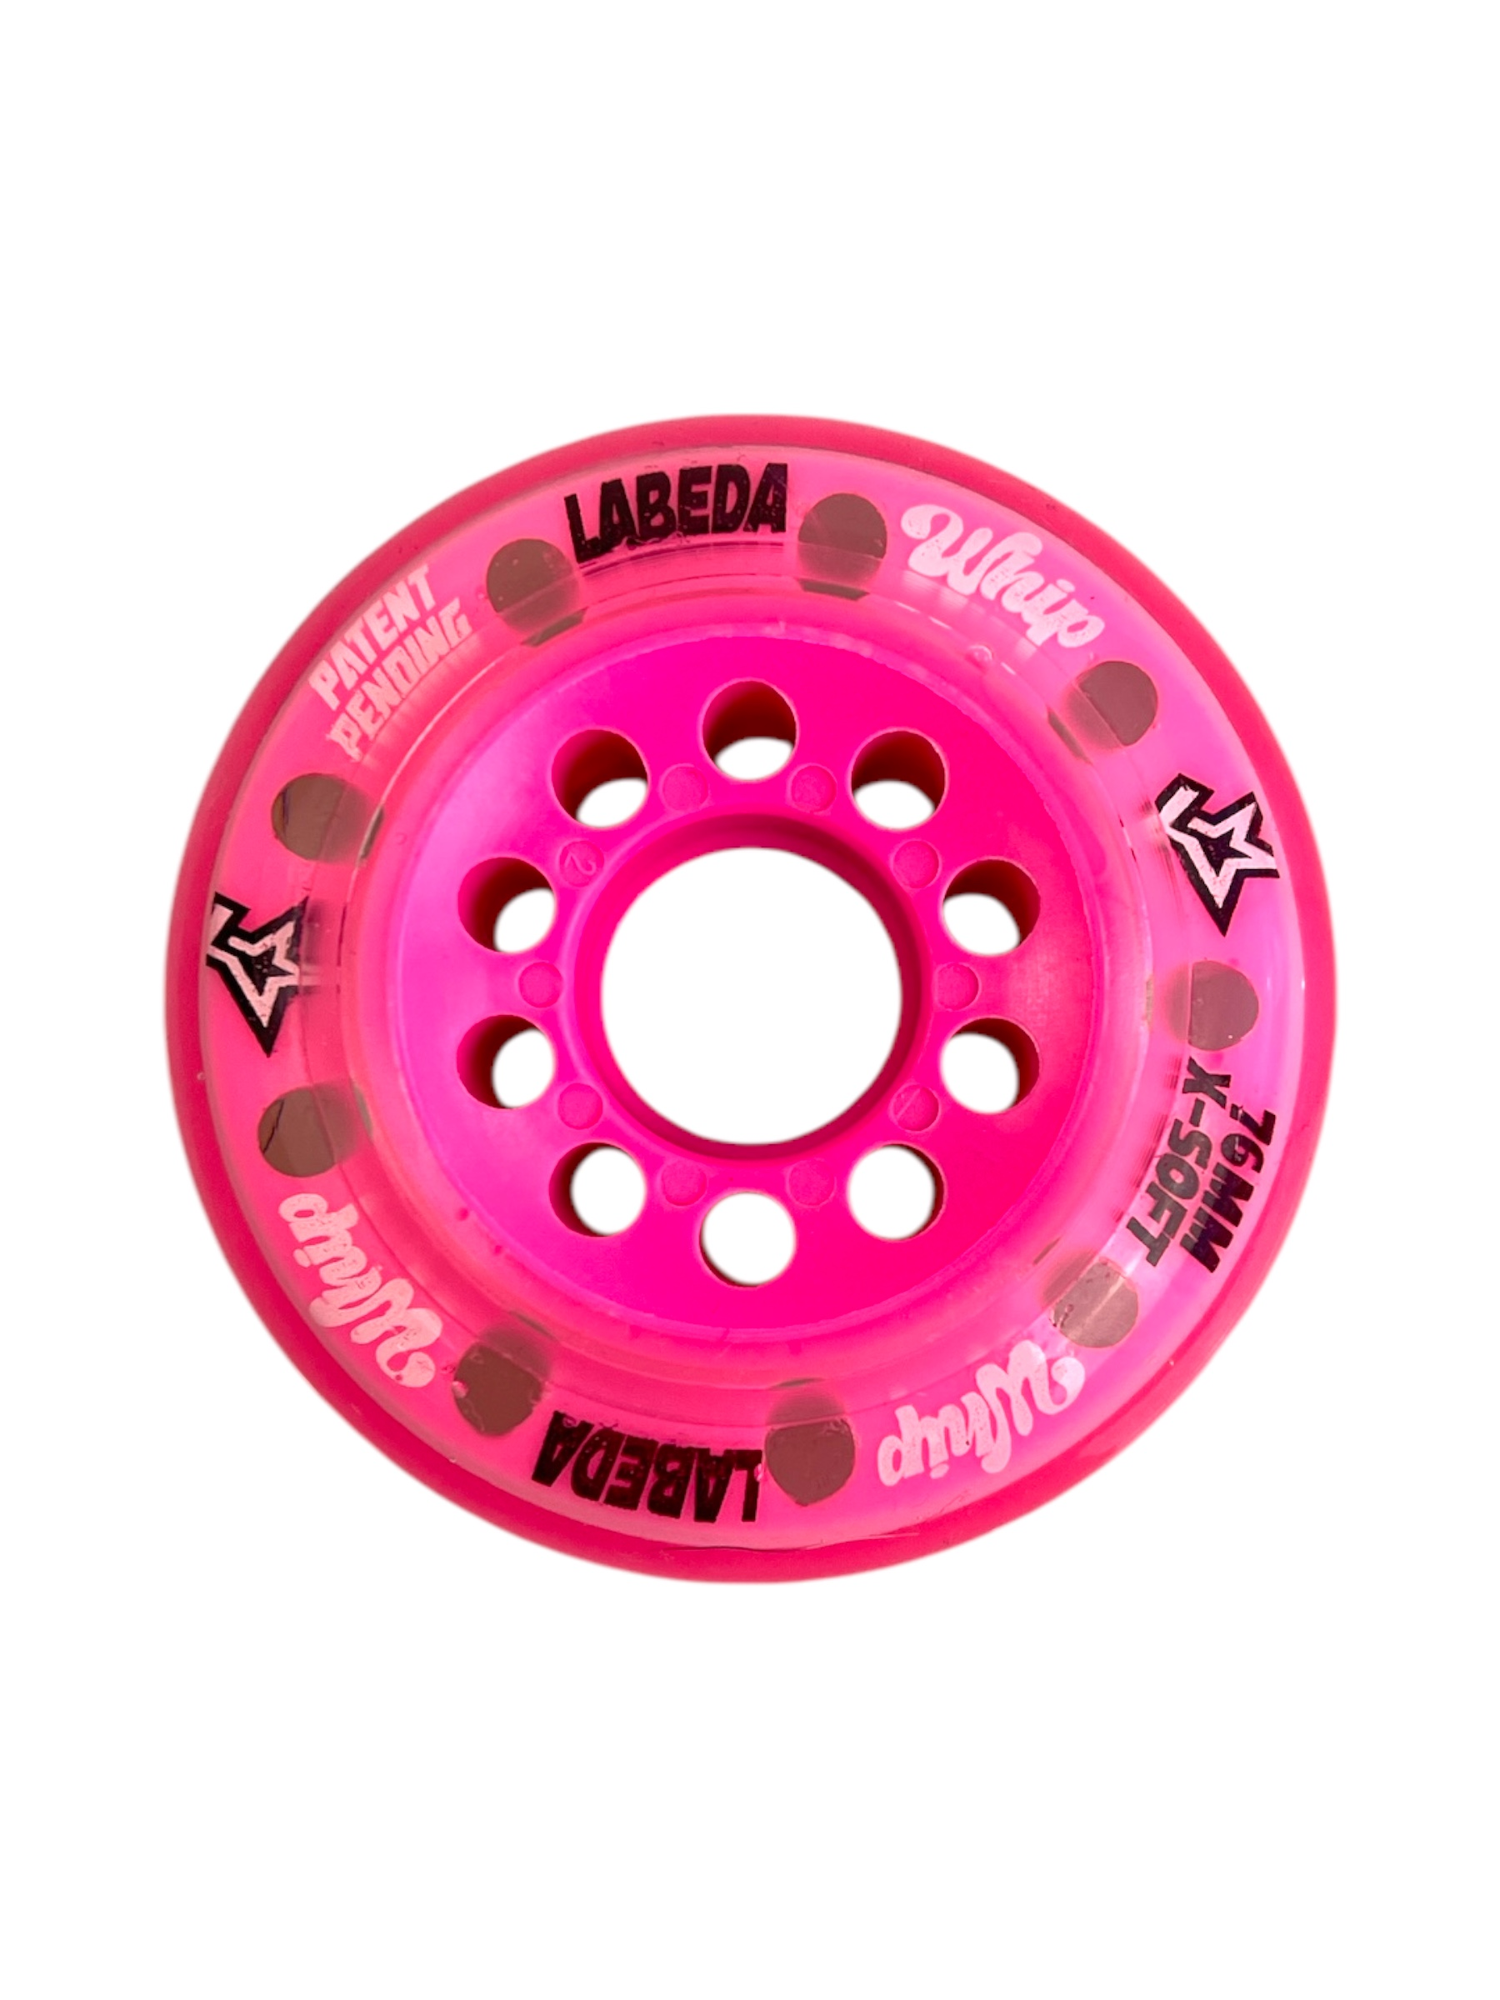 Labeda Hockey Company - USA Made – Labeda Wheels